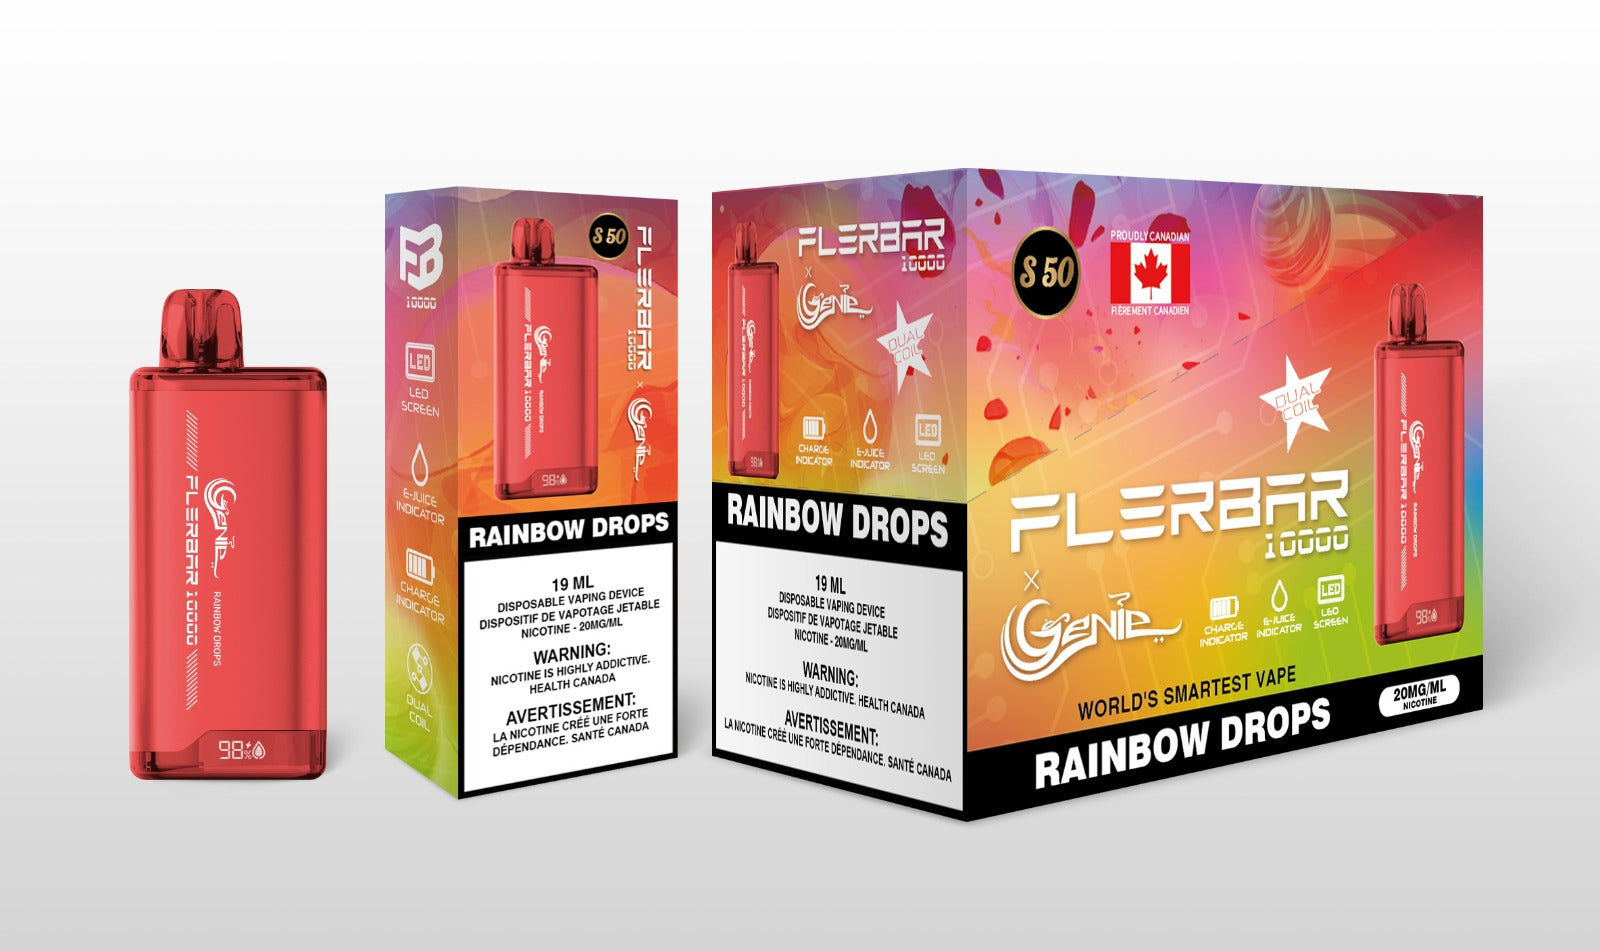 Genie 10000 flerbar- 10000 PUFFS  20 mg / mL Salt Nicotine  Juice Capacity: 19 mL  Dual Coil  Charge Indicator  E- Juice Indicator  LED Screen rainbow drops s50